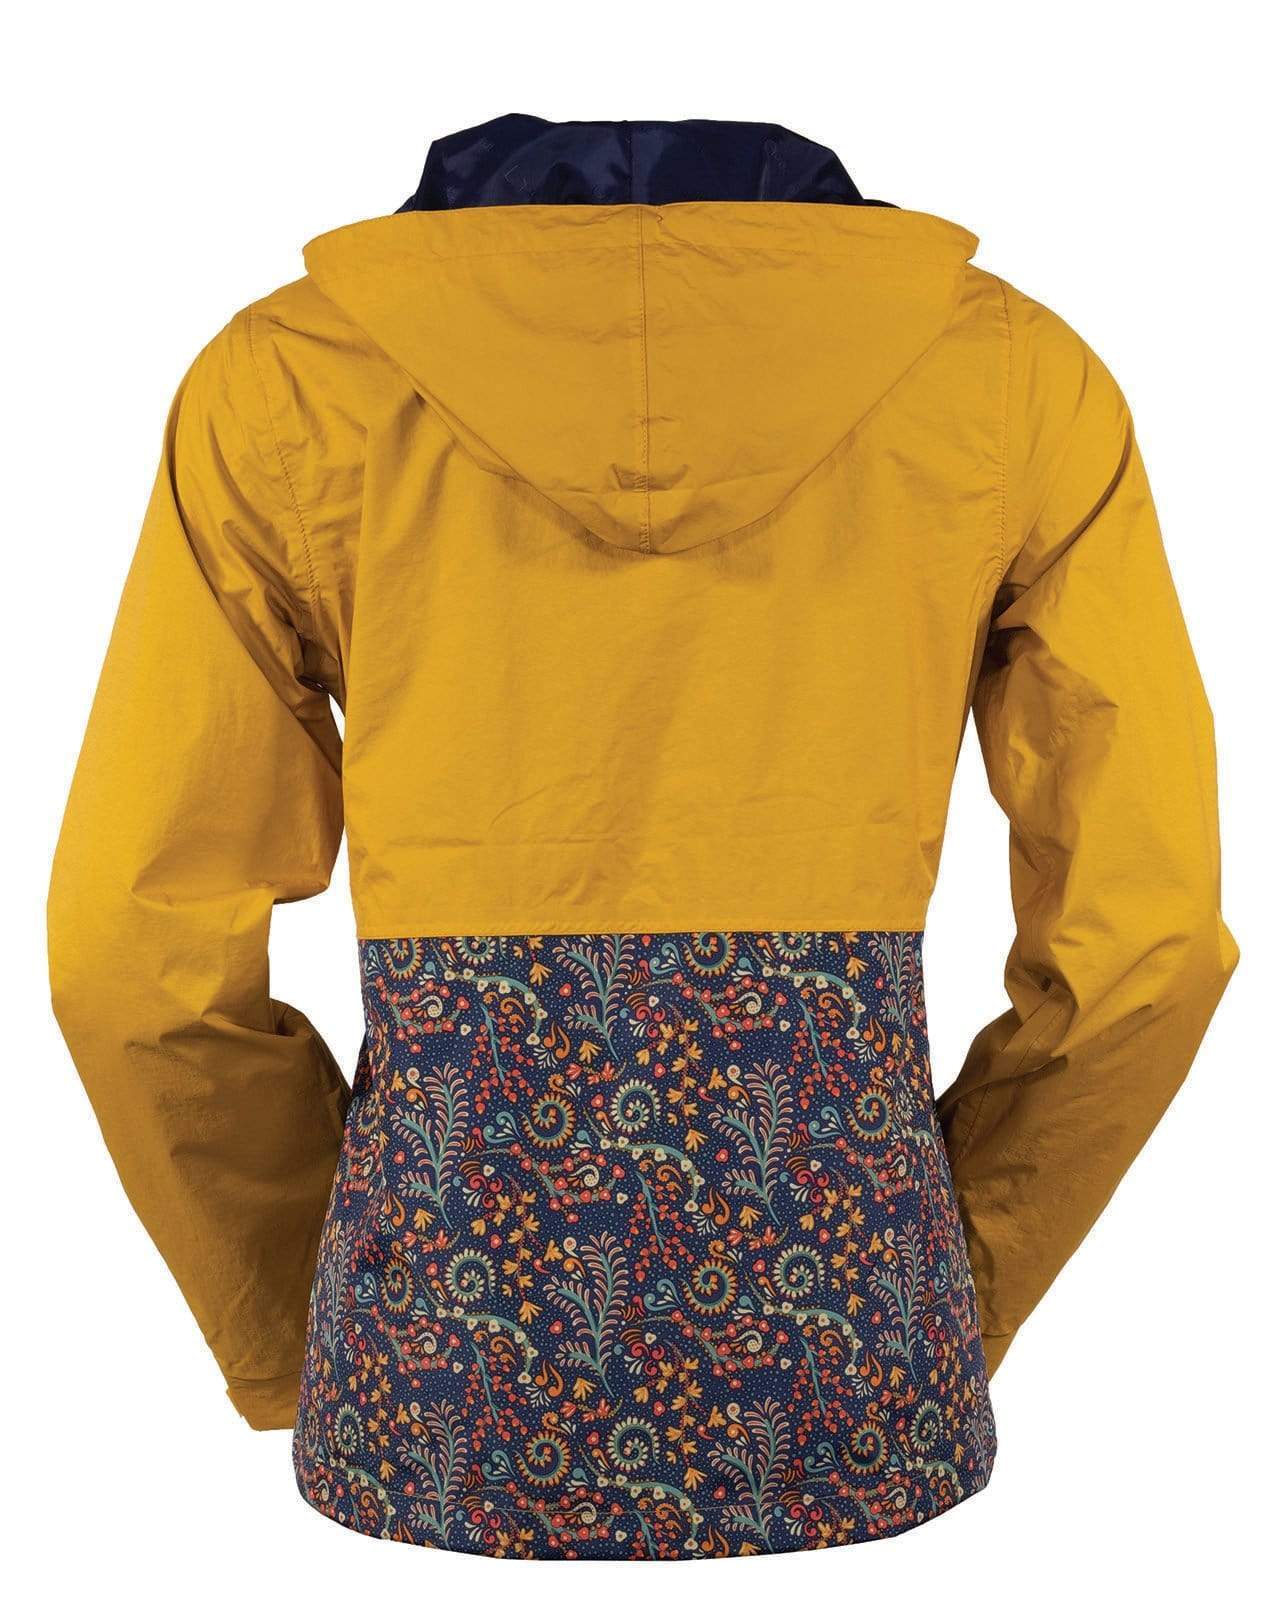 Outback Trading Company Women’s Agetha Jacket Coats & Jackets